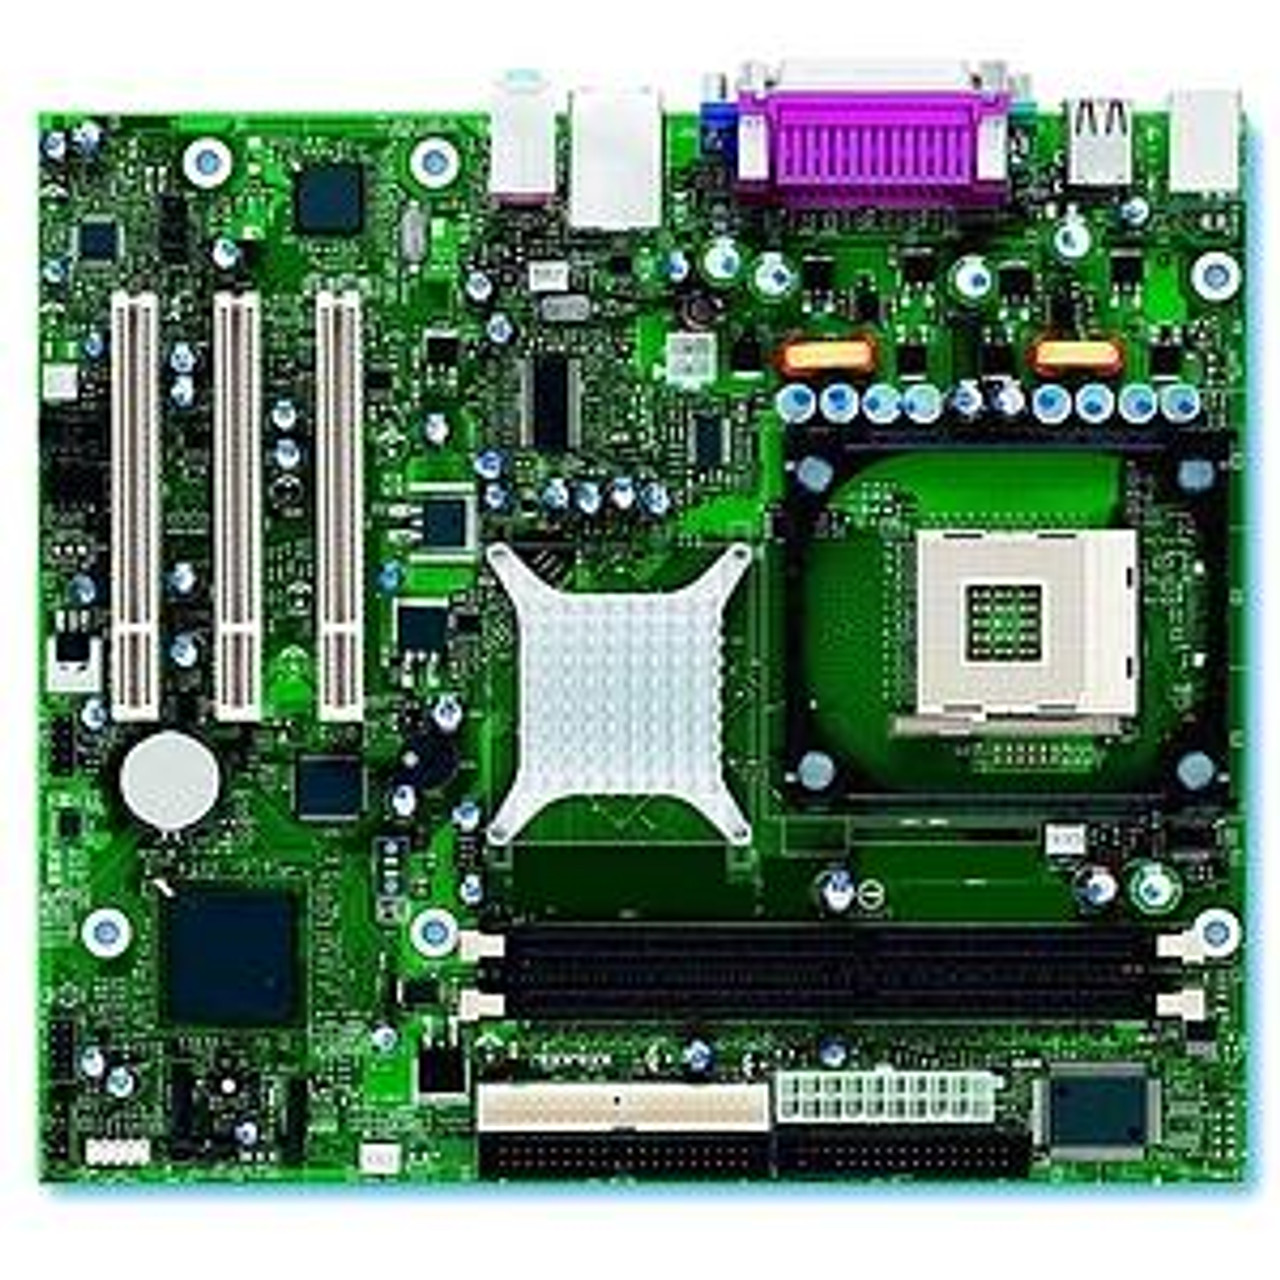 BLKD865GVHZL - Intel D865GVHZ Desktop Motherboard Intel 865GV Chipset Socket PGA-478 -1 x Processor Support (1 x Single Pack) (Refurbished)